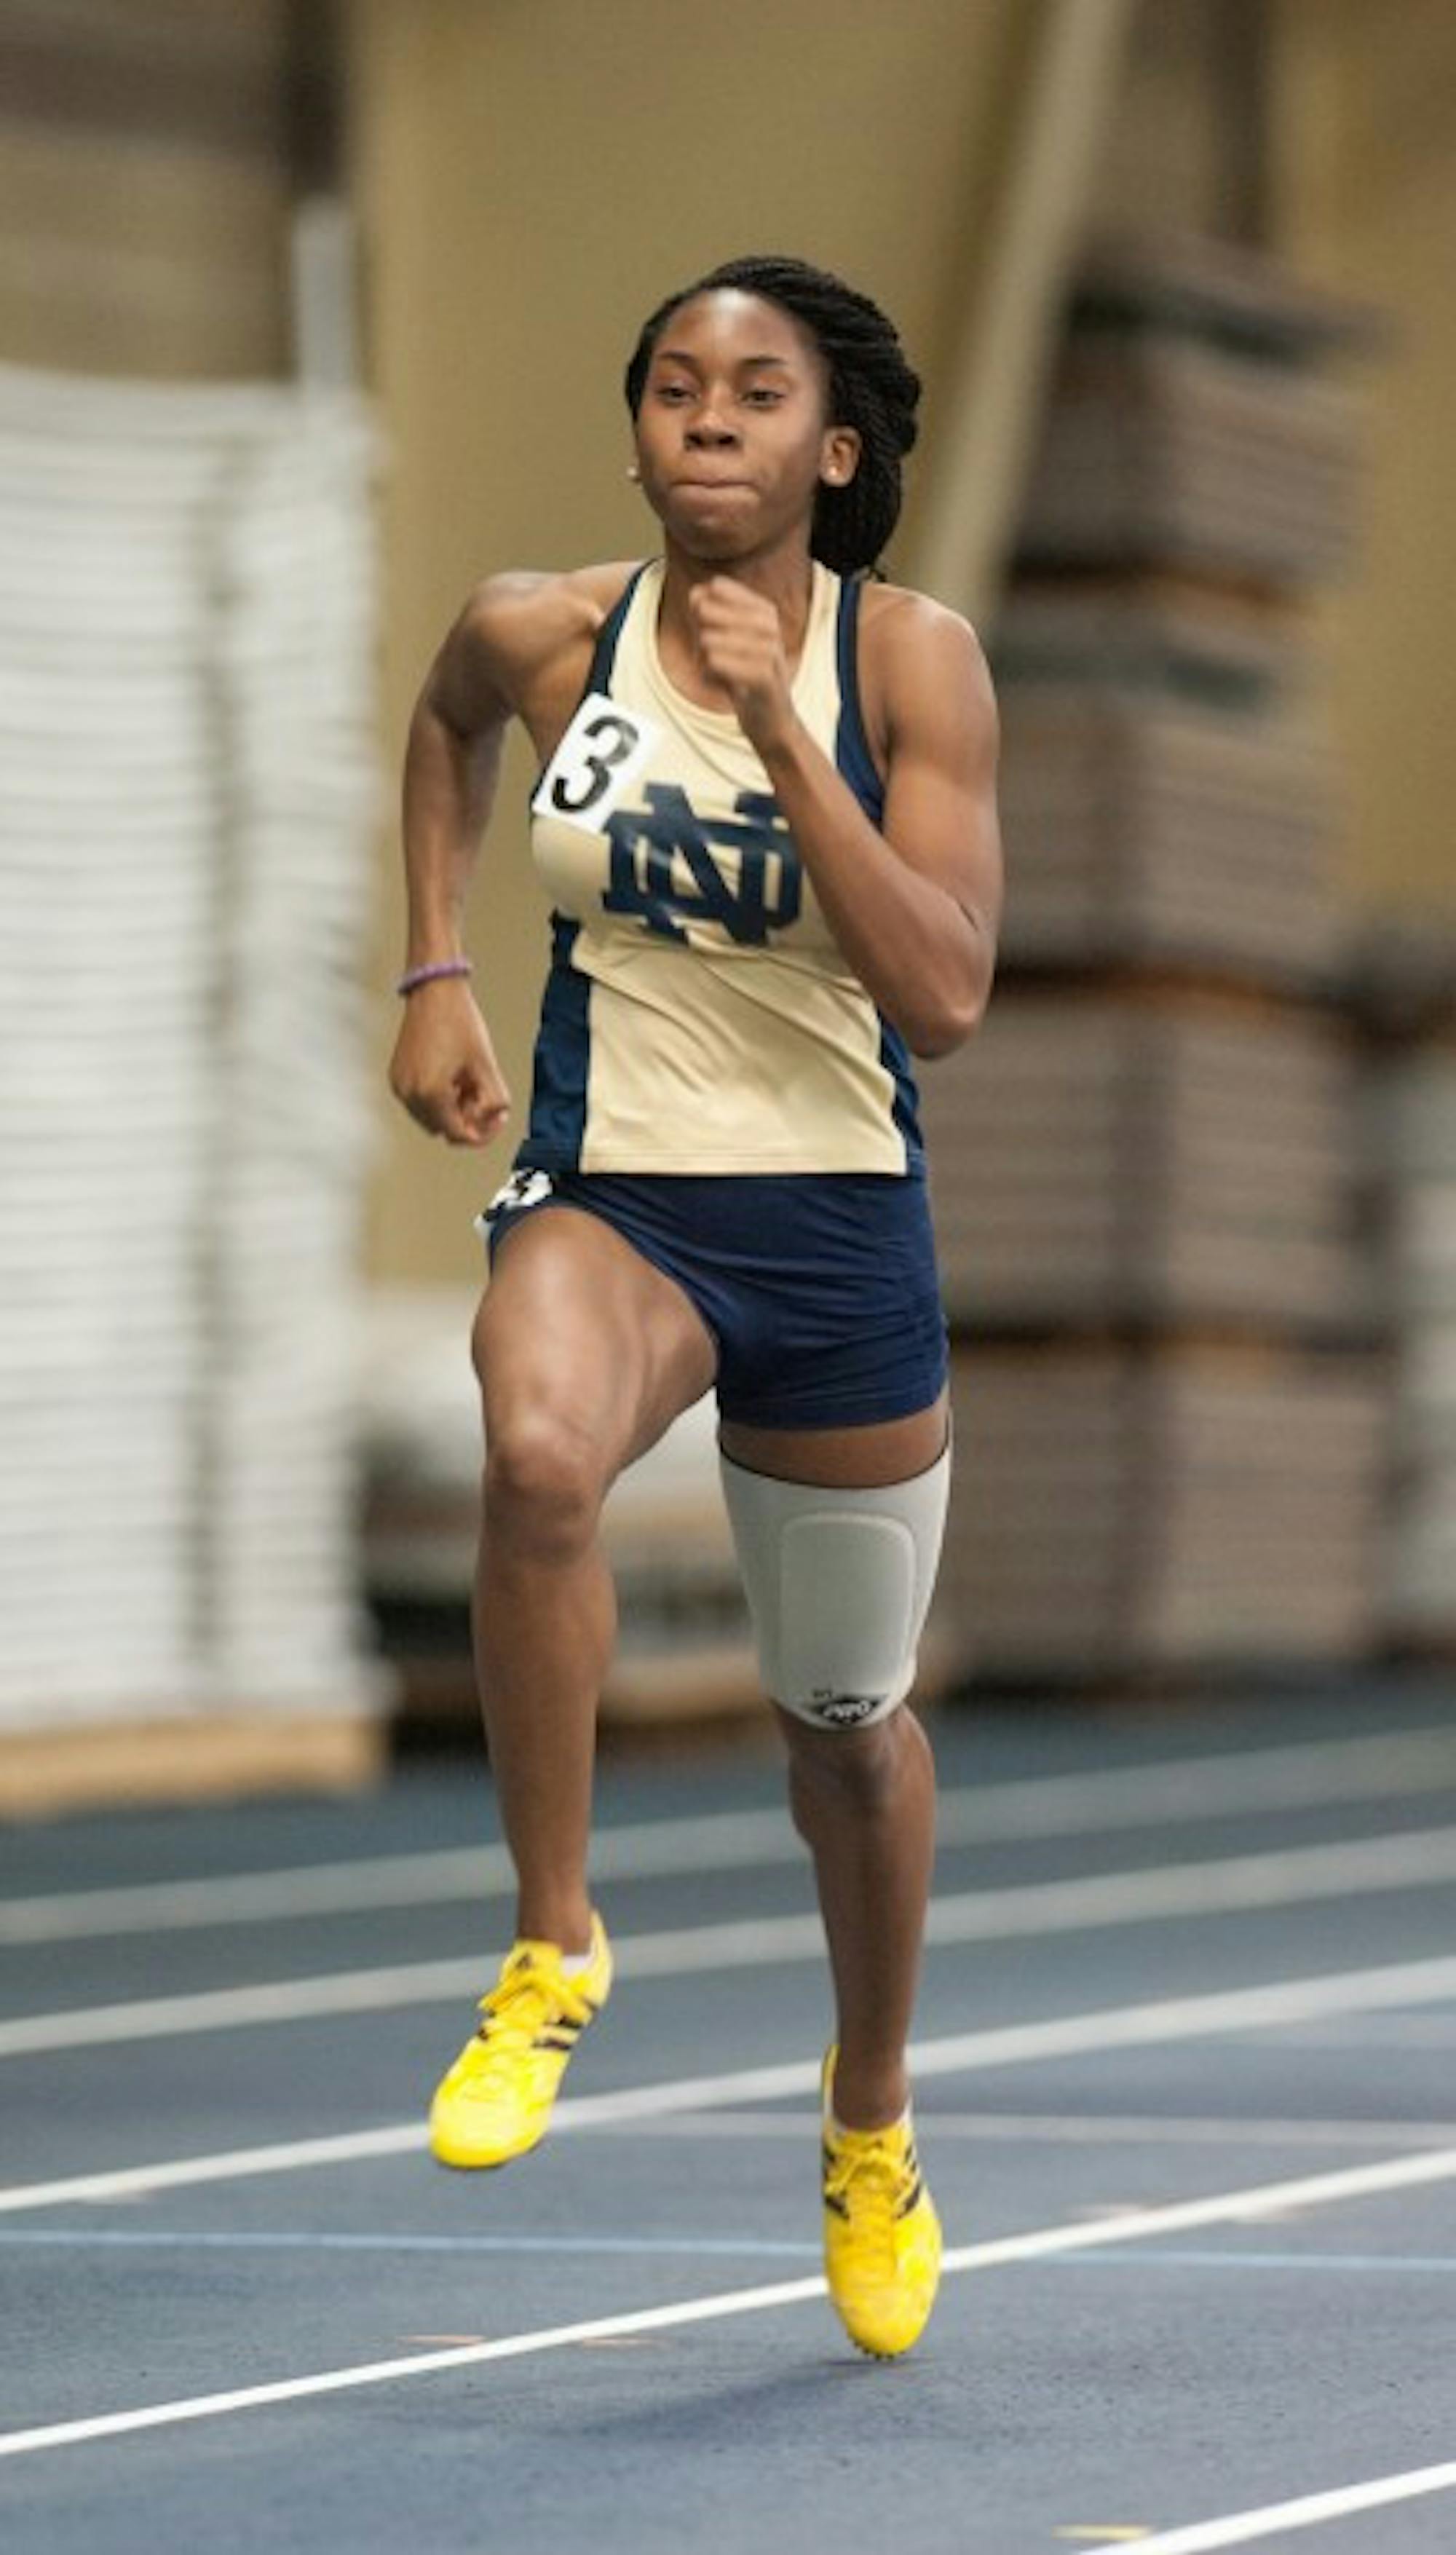 Senior sprinter Margaret Bamgbose competes during the Notre Dame Invitational at Loftus Sports Center on Jan. 25, 2014.